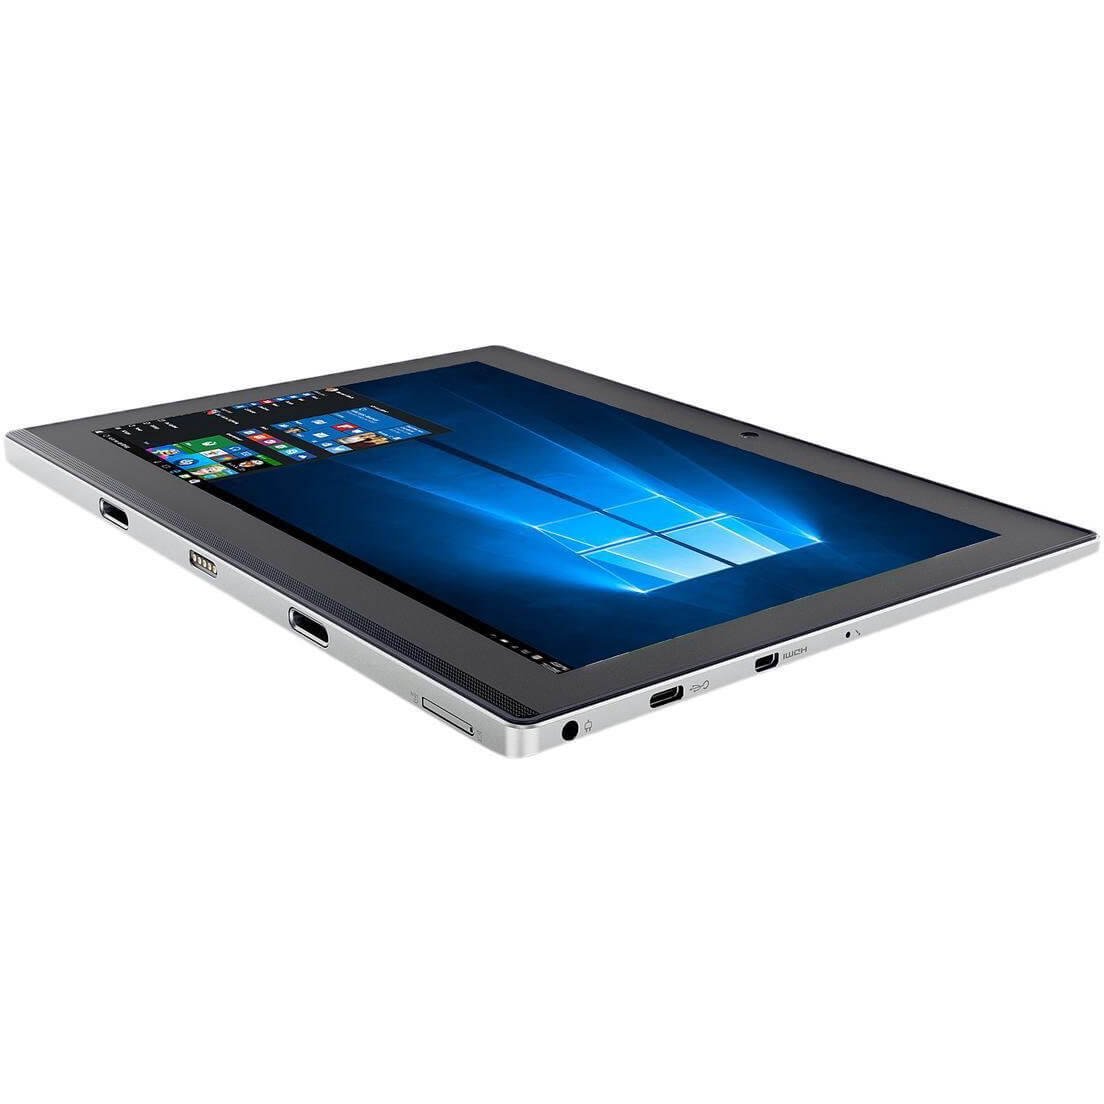 Lenovo Miix 320 10.1" Detachable Touchscreen 2in1 Tablet with Keyboard/Laptop 2GB/64GB Windows 10 Snow White